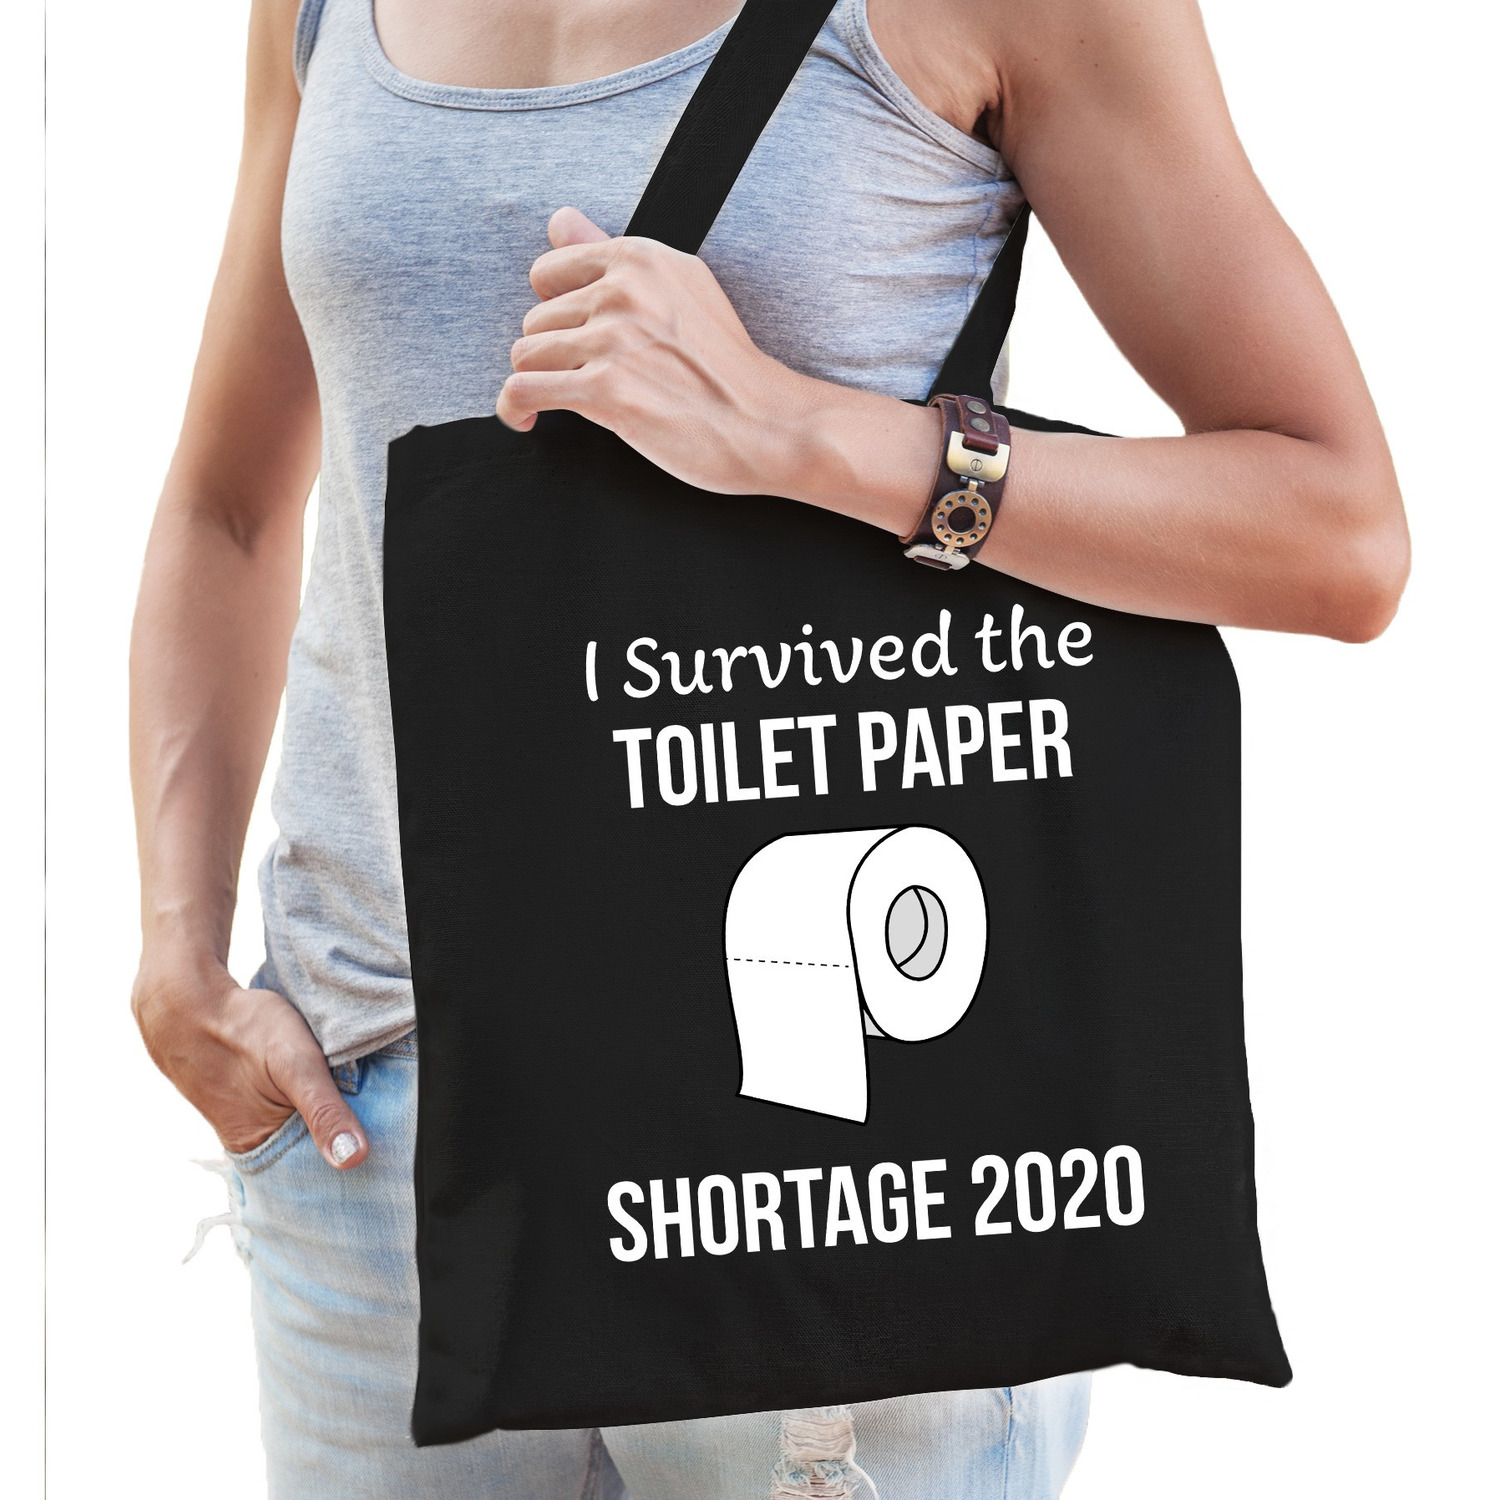 I survived the toilet paper shortage 2020 tas zwart voor dames